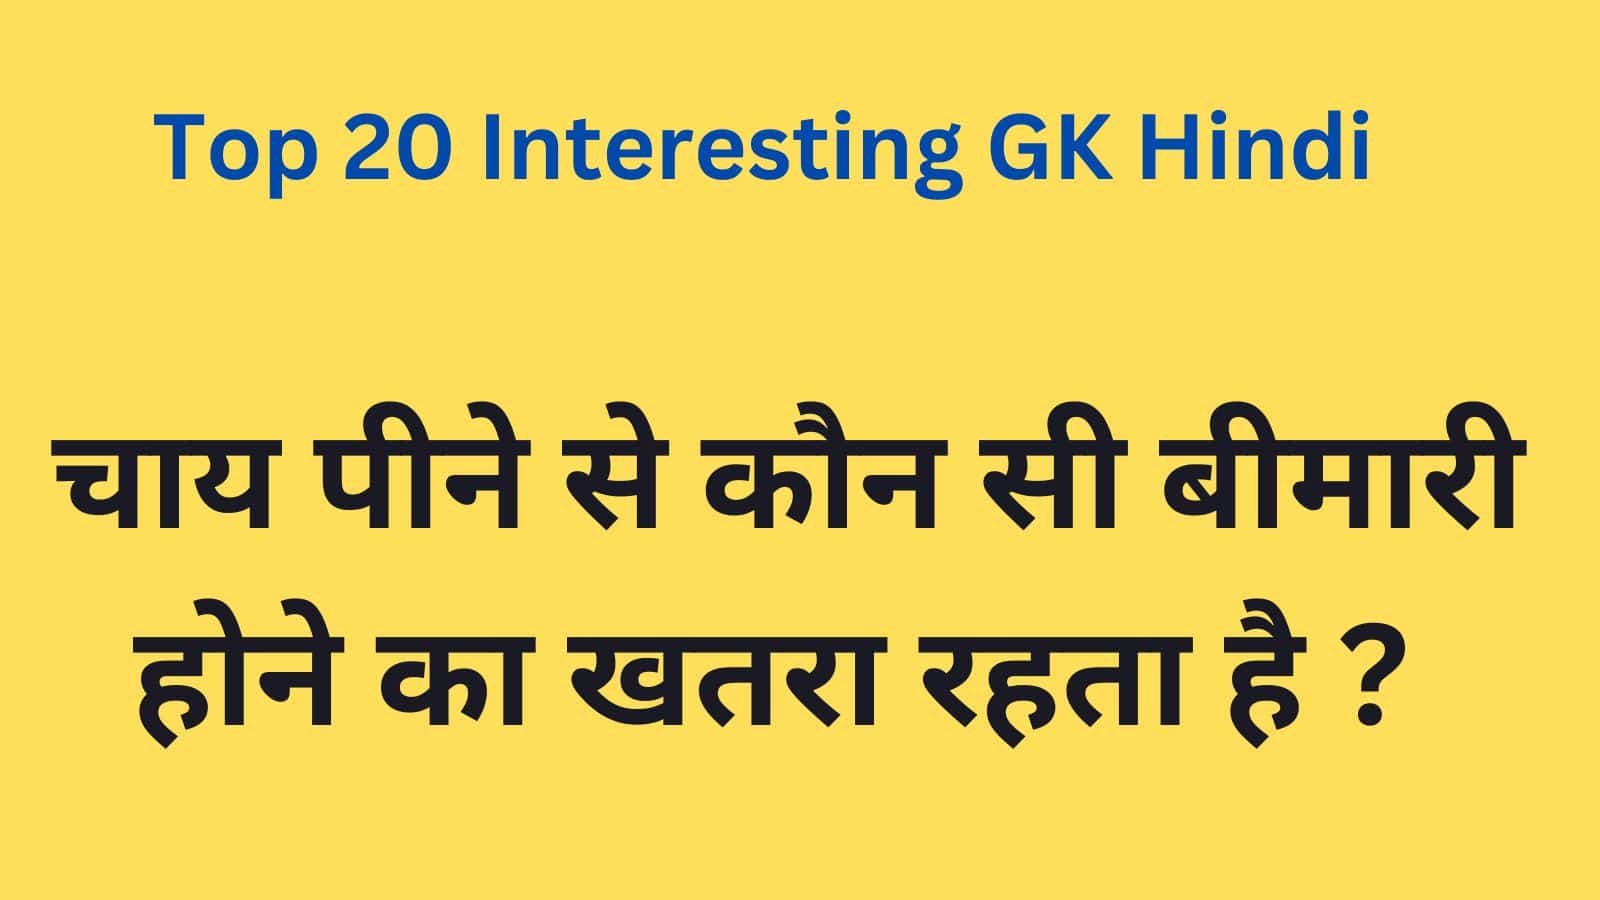 Interesting GK Hindi